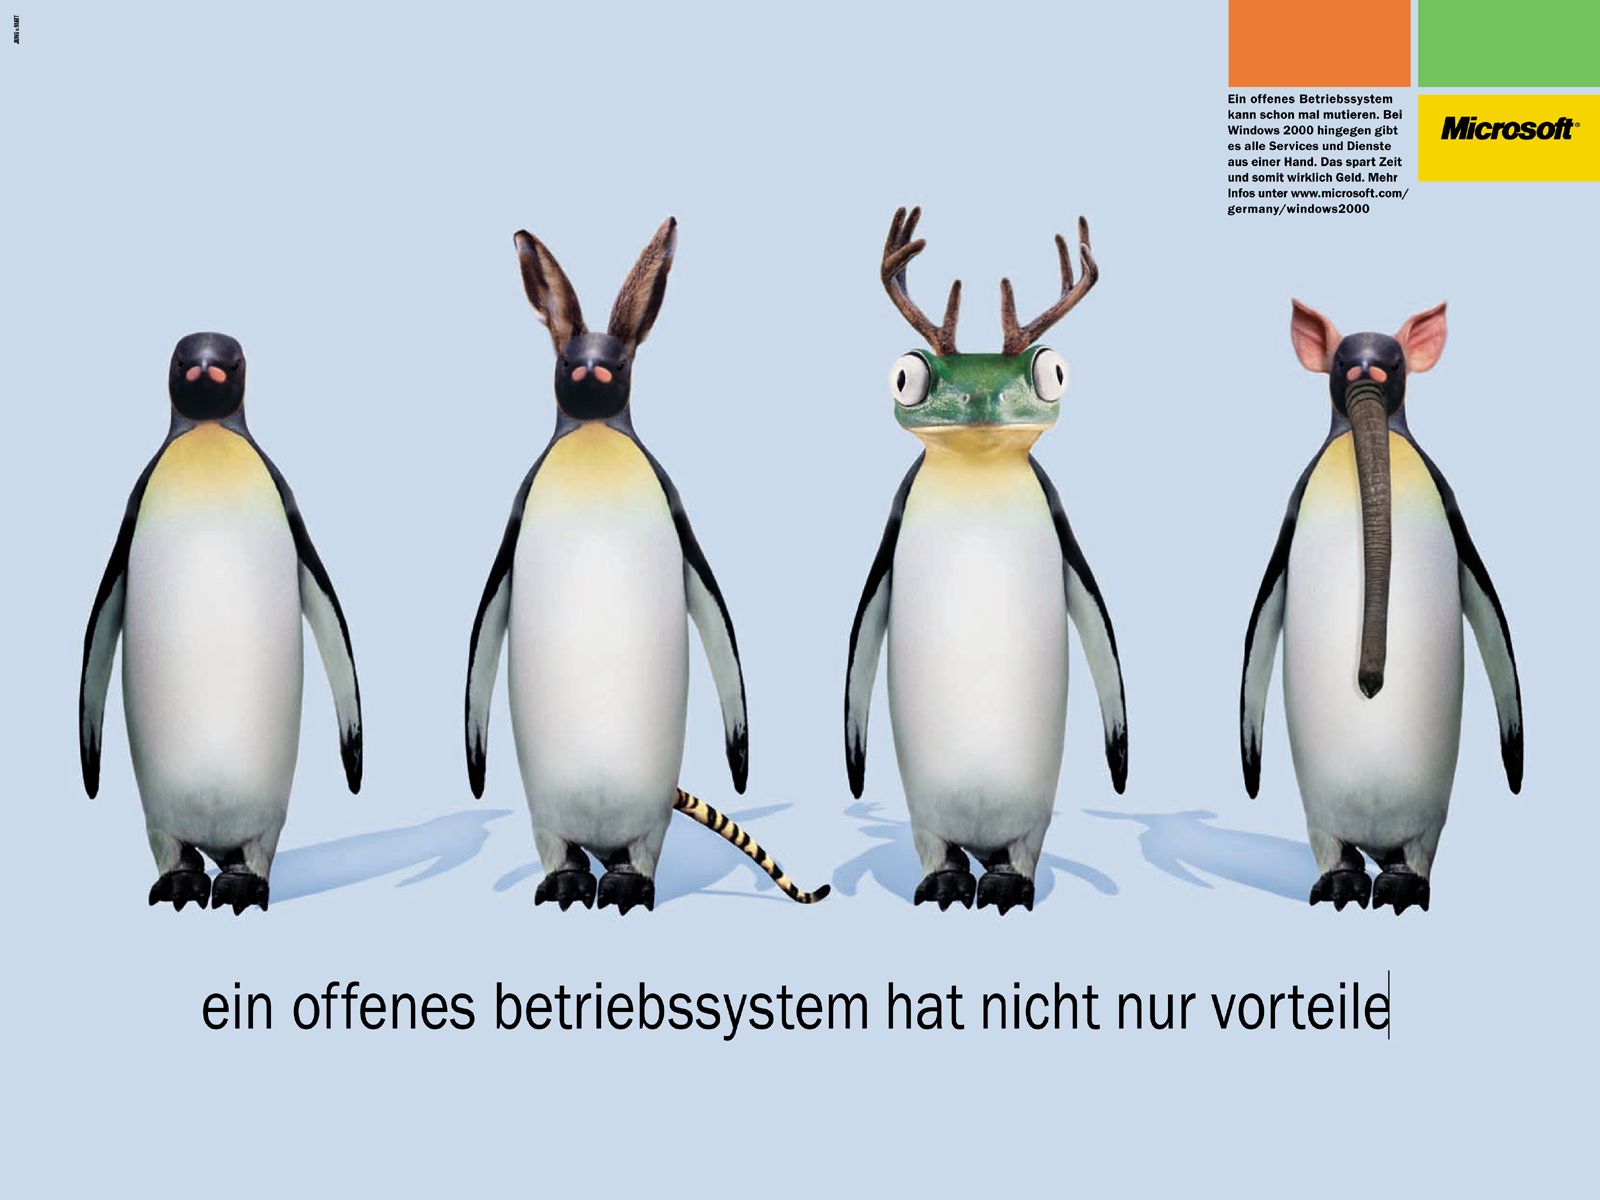 Microsoft Linux ad